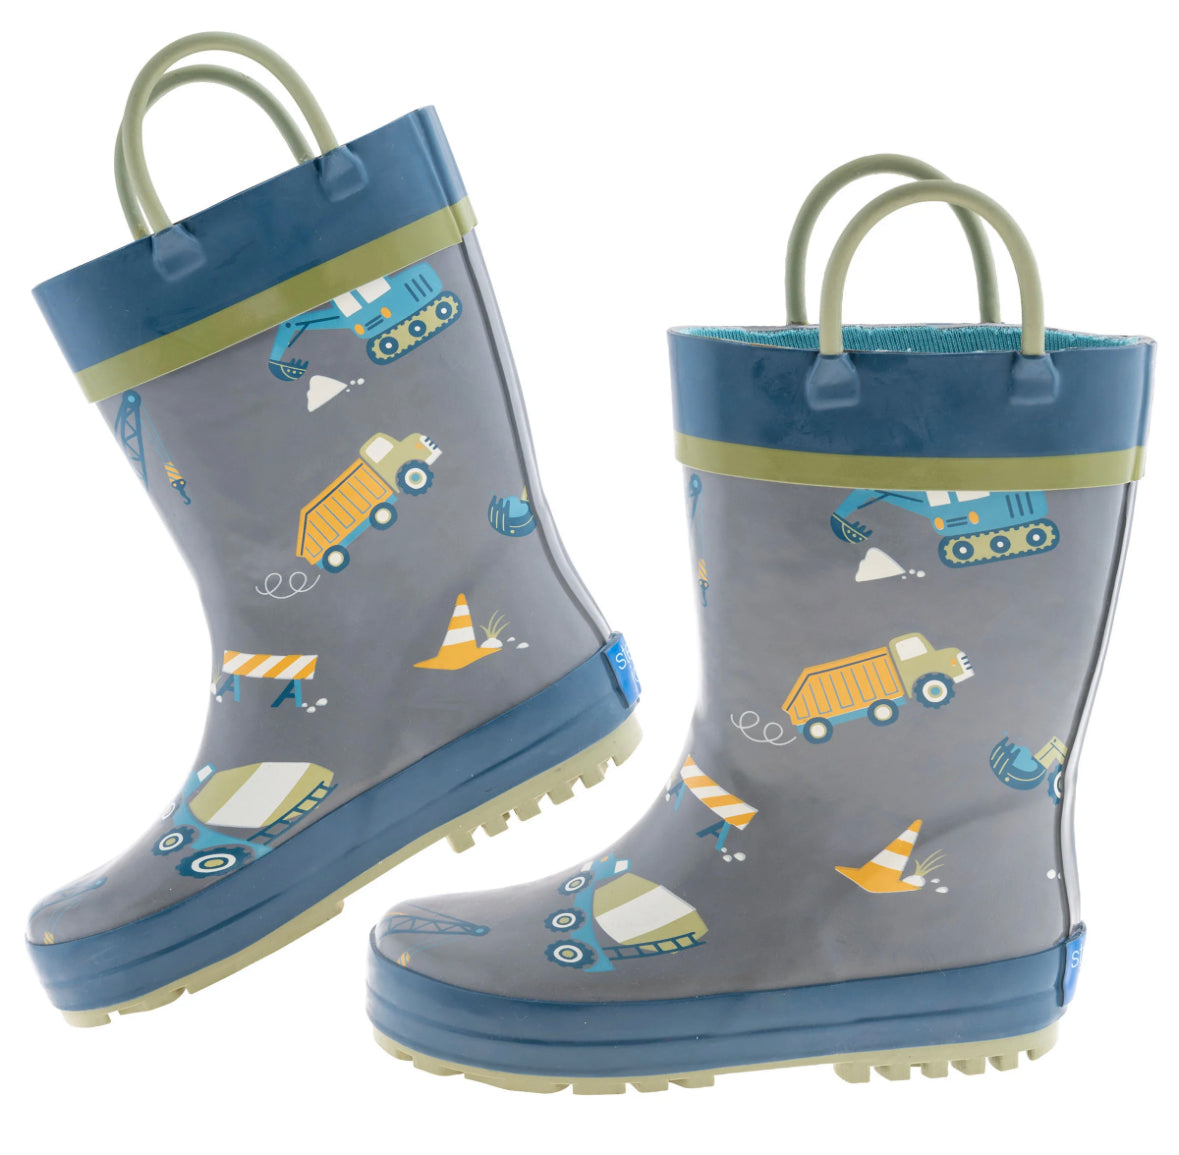 Stephen Joseph Waterproof children's rain boots with construction vehicles.